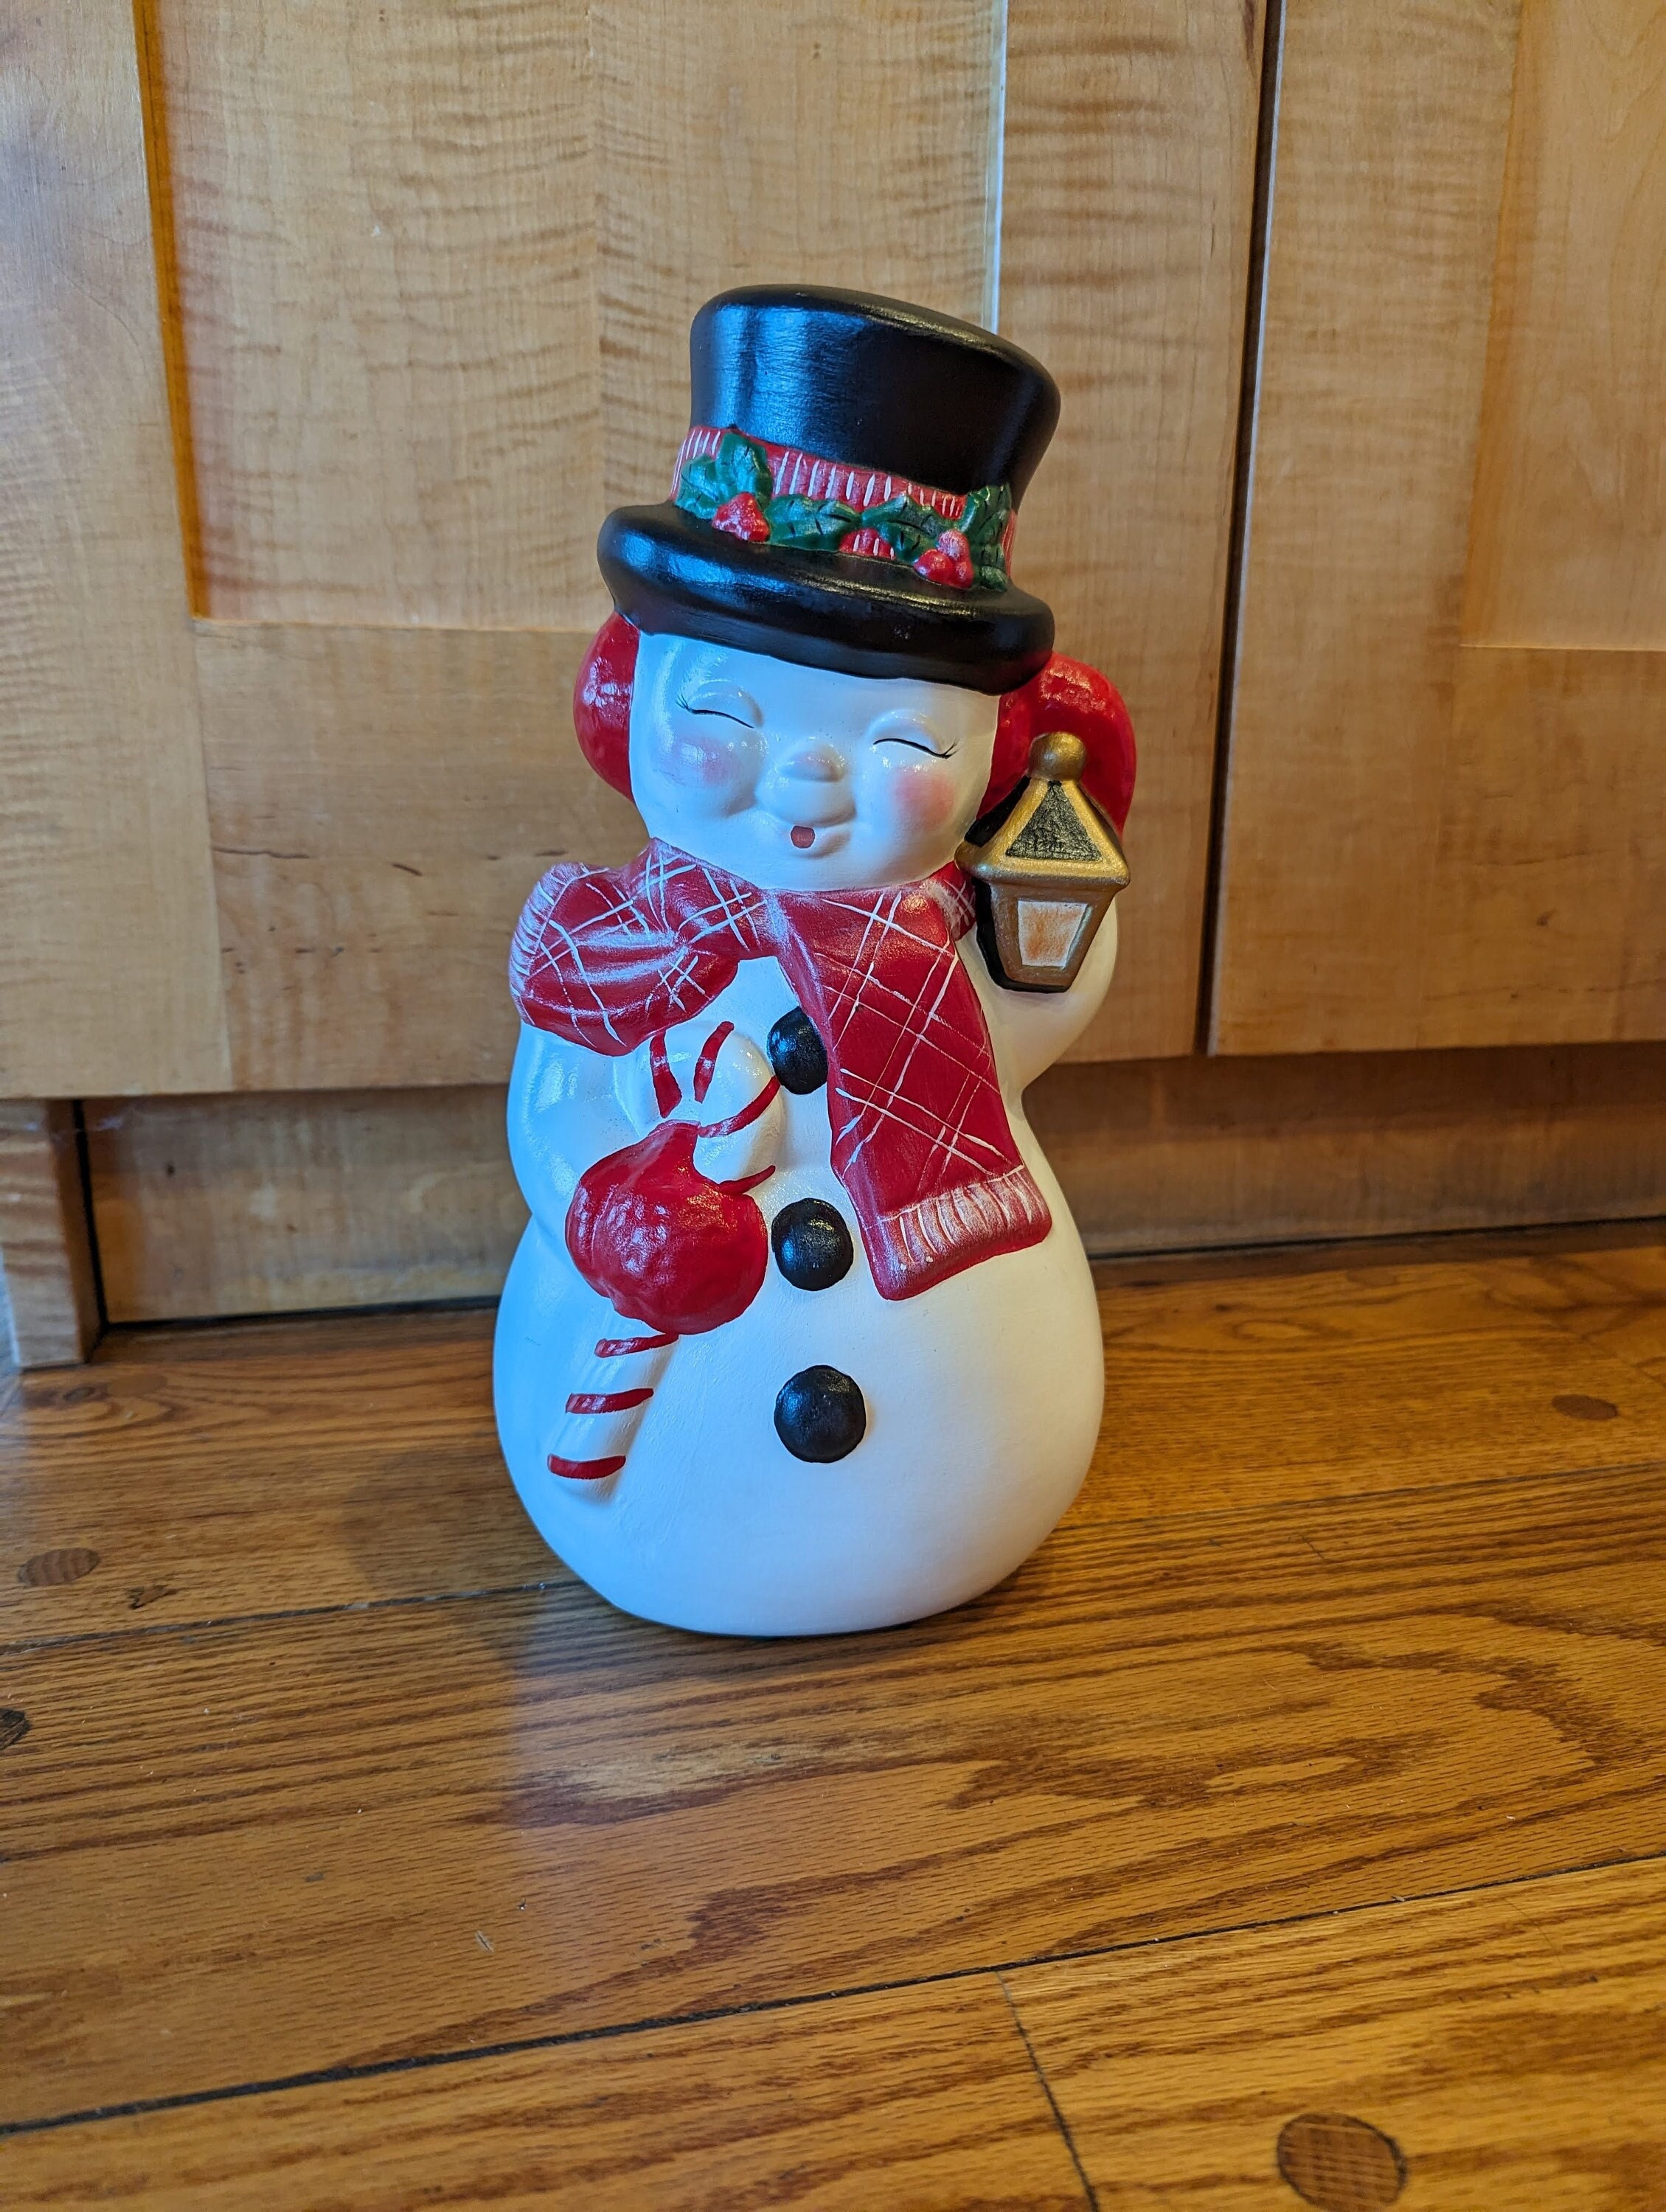 9.5 Snowman Couple, Mr & Mrs Frosty Paintable Bisque for Snowmen